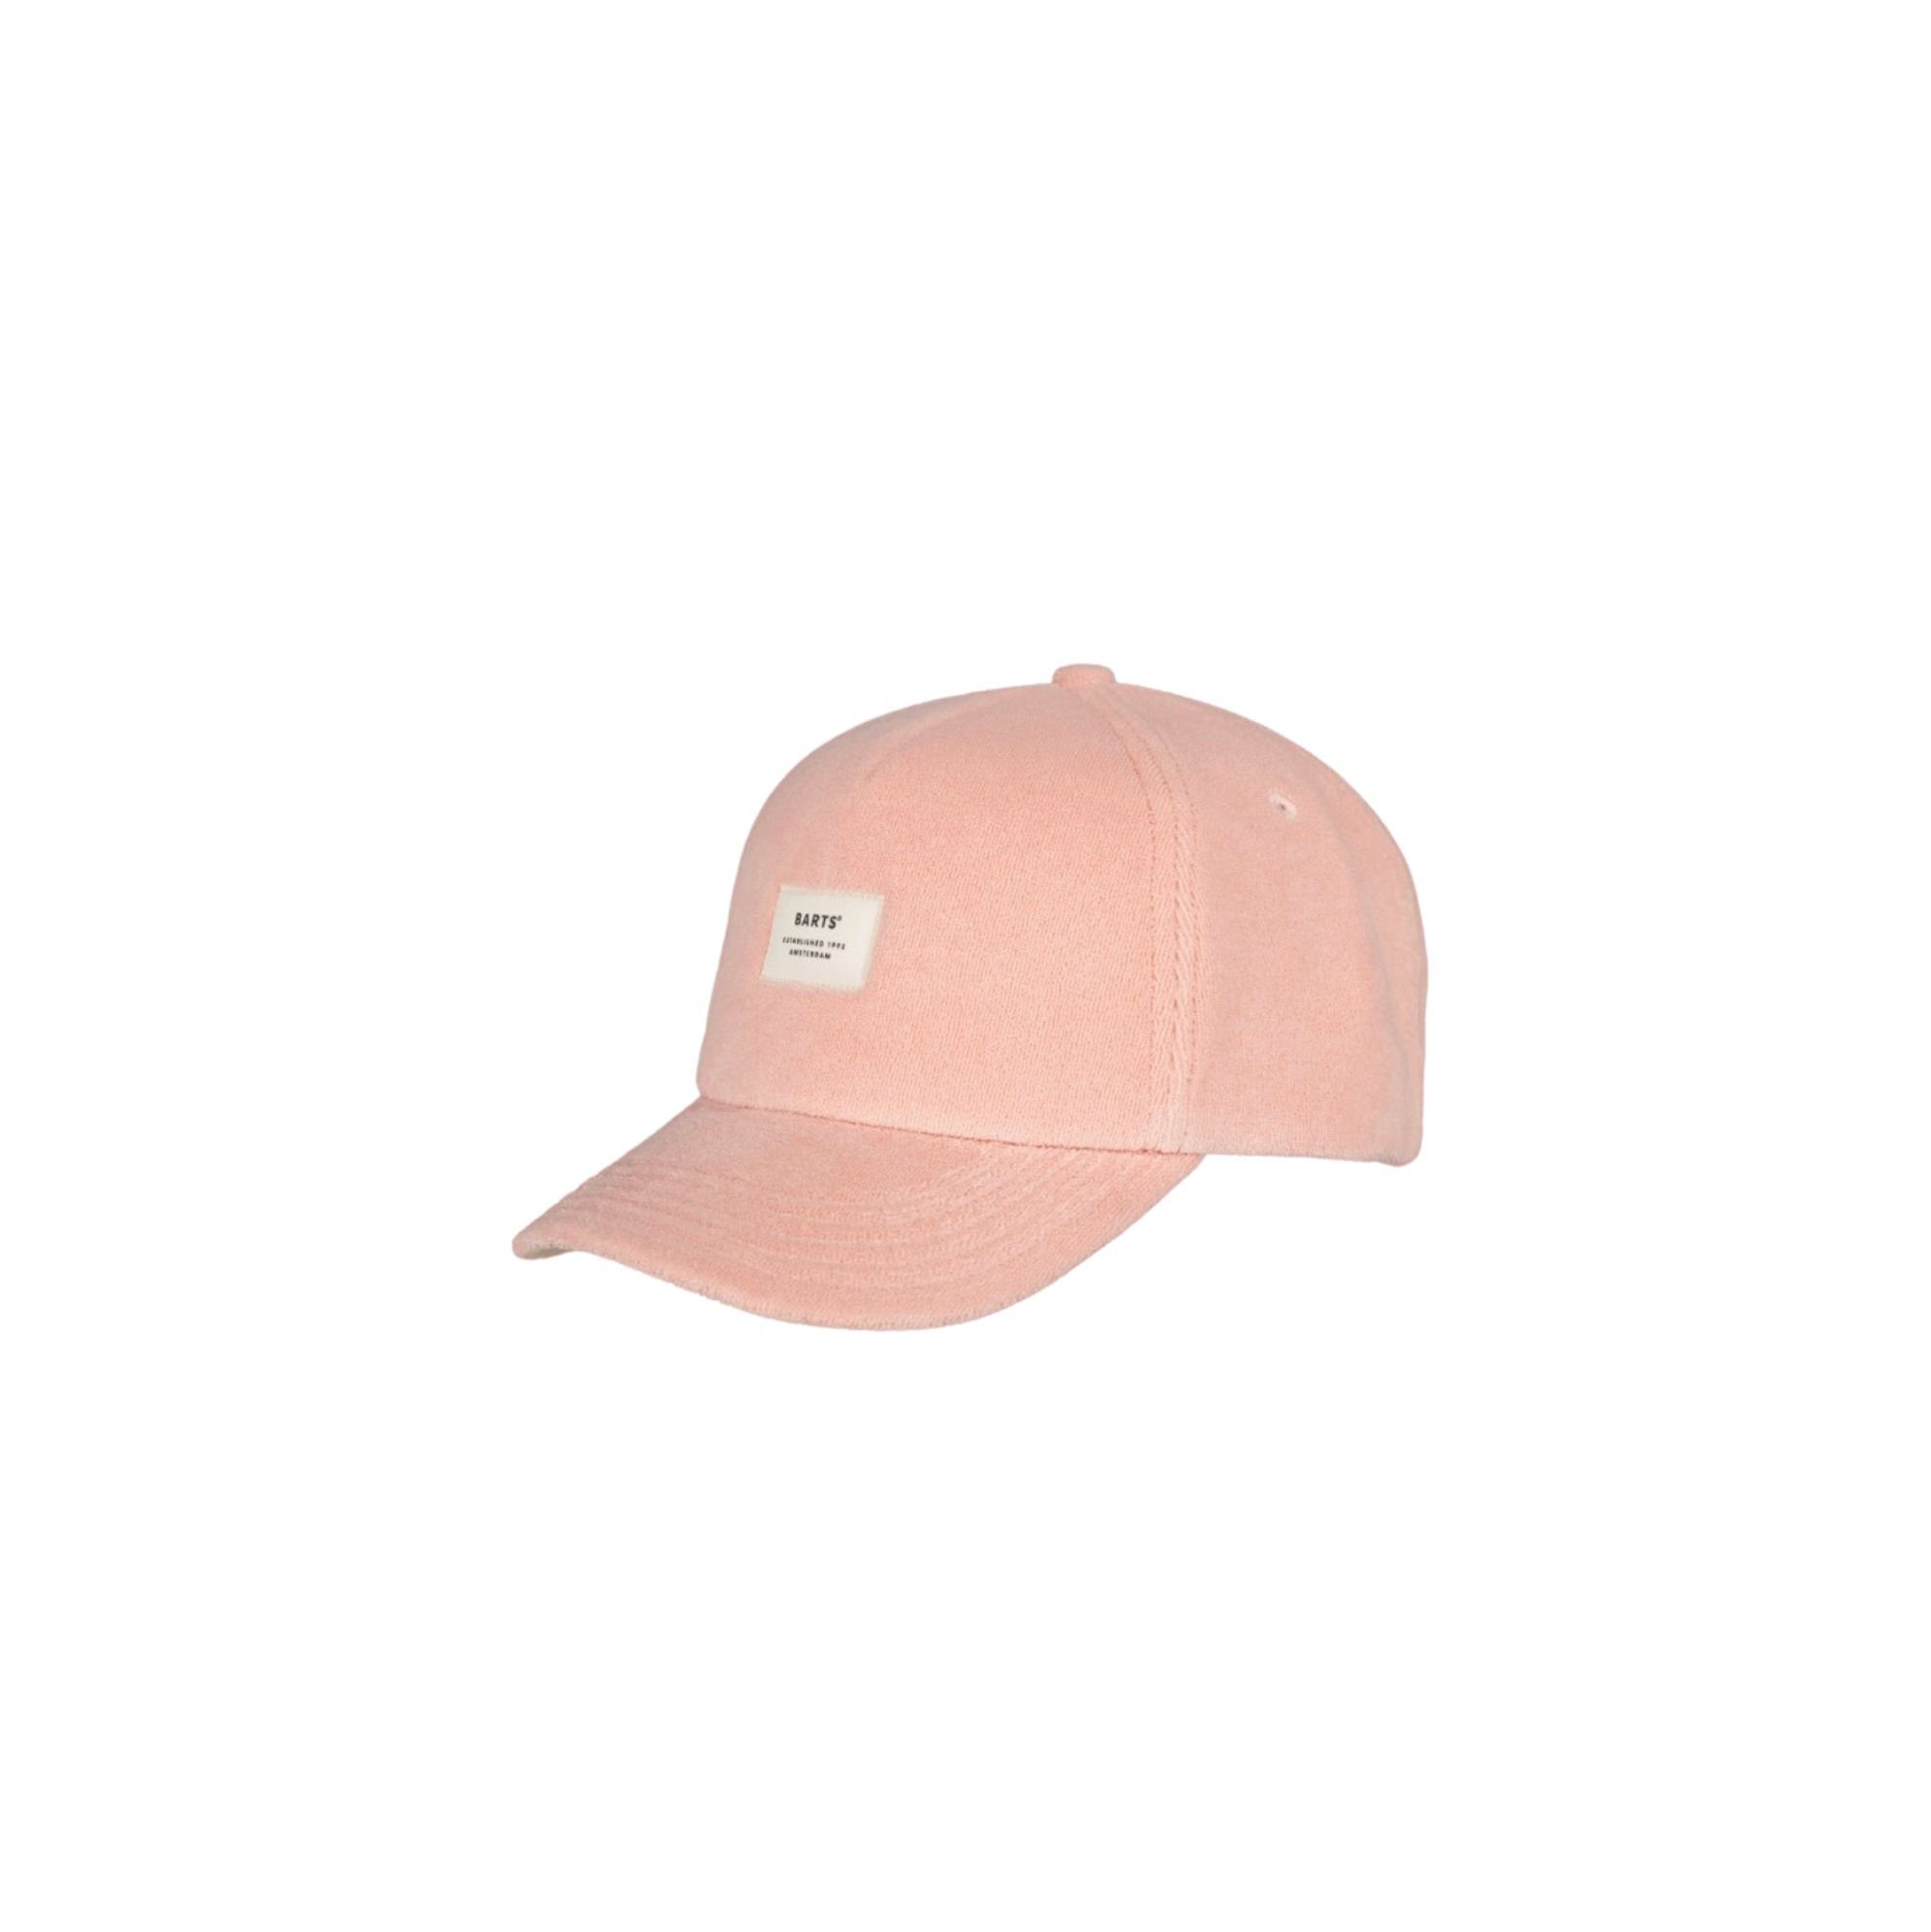 rosa, Mädchen Cap oder Baseball Barts beige in Cap Cap Begonia Größenverstellbar Pink pink Baseball Dusty